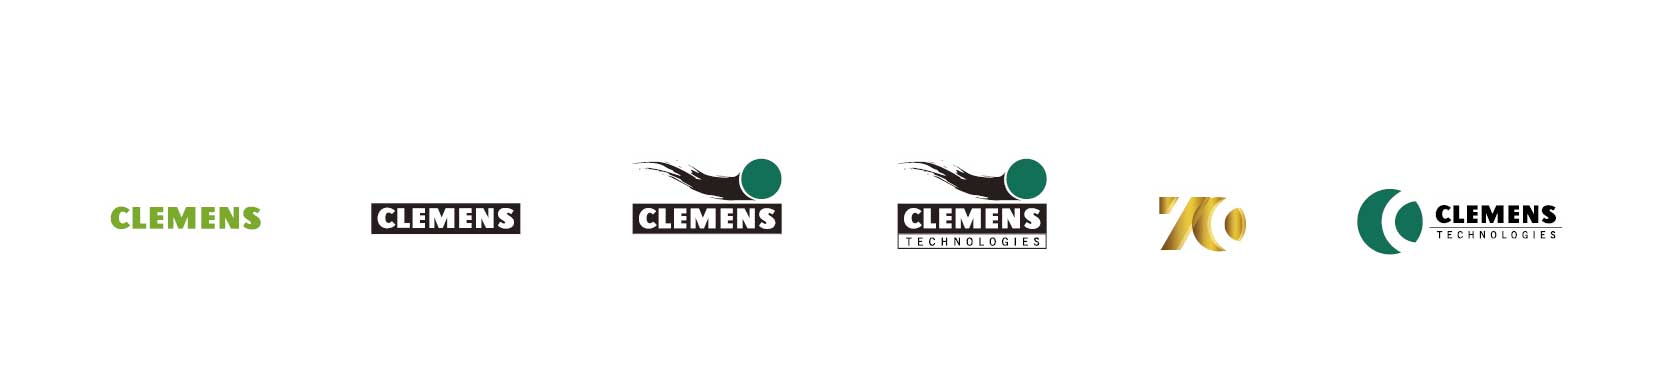 CLEMENS Technologies Sviluppo del logo